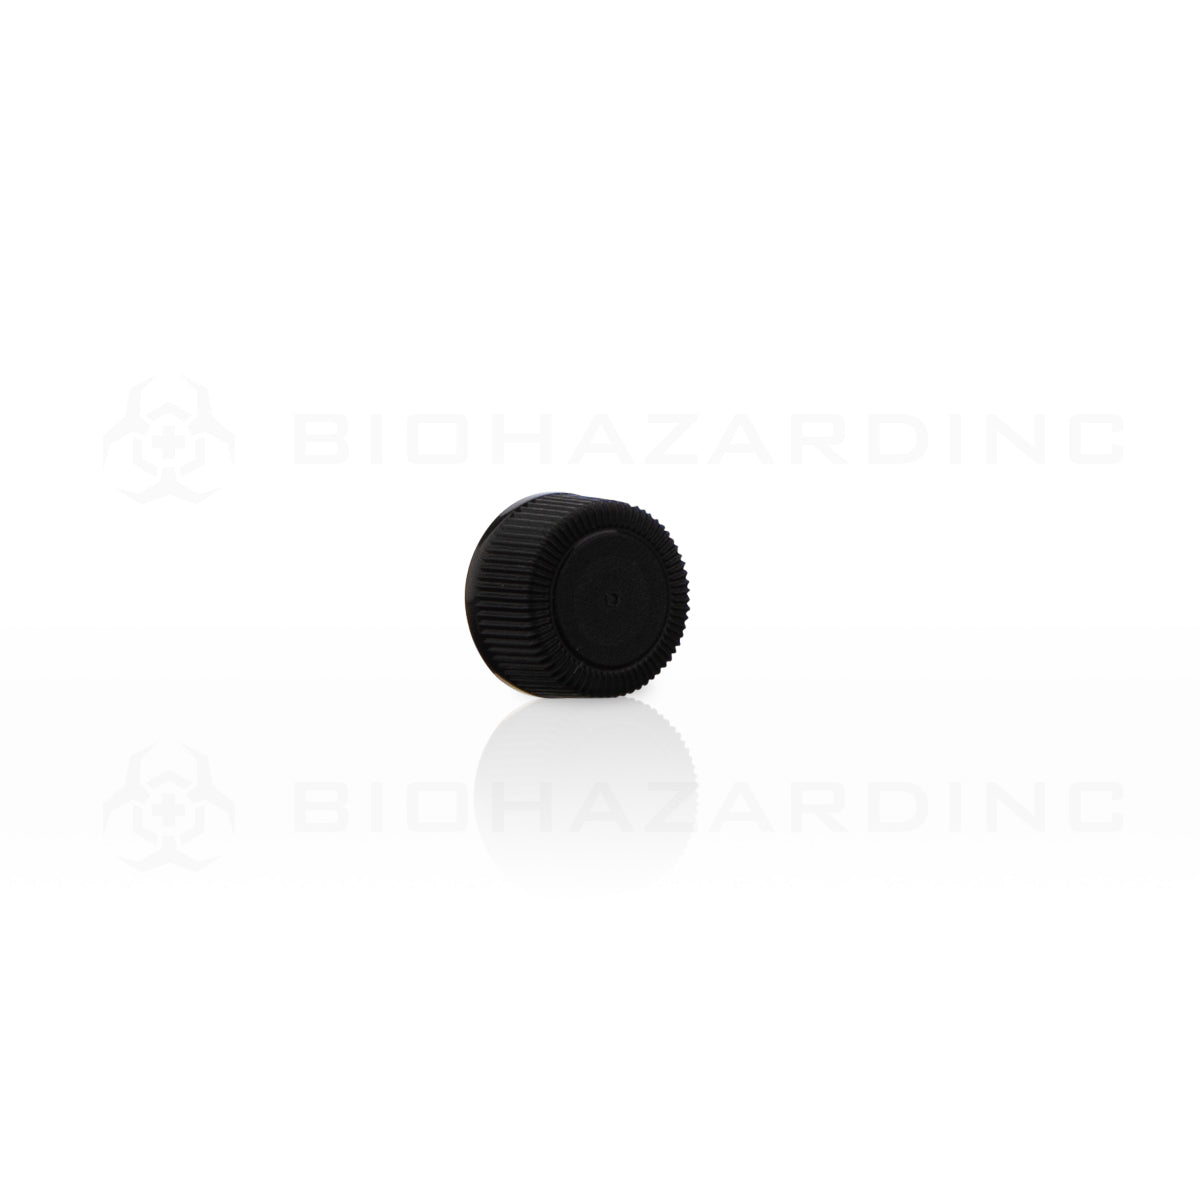 Plastic Cap | Polypropylene Plastic Caps | 13mm - Black - 144 Count Cap Biohazard Inc   